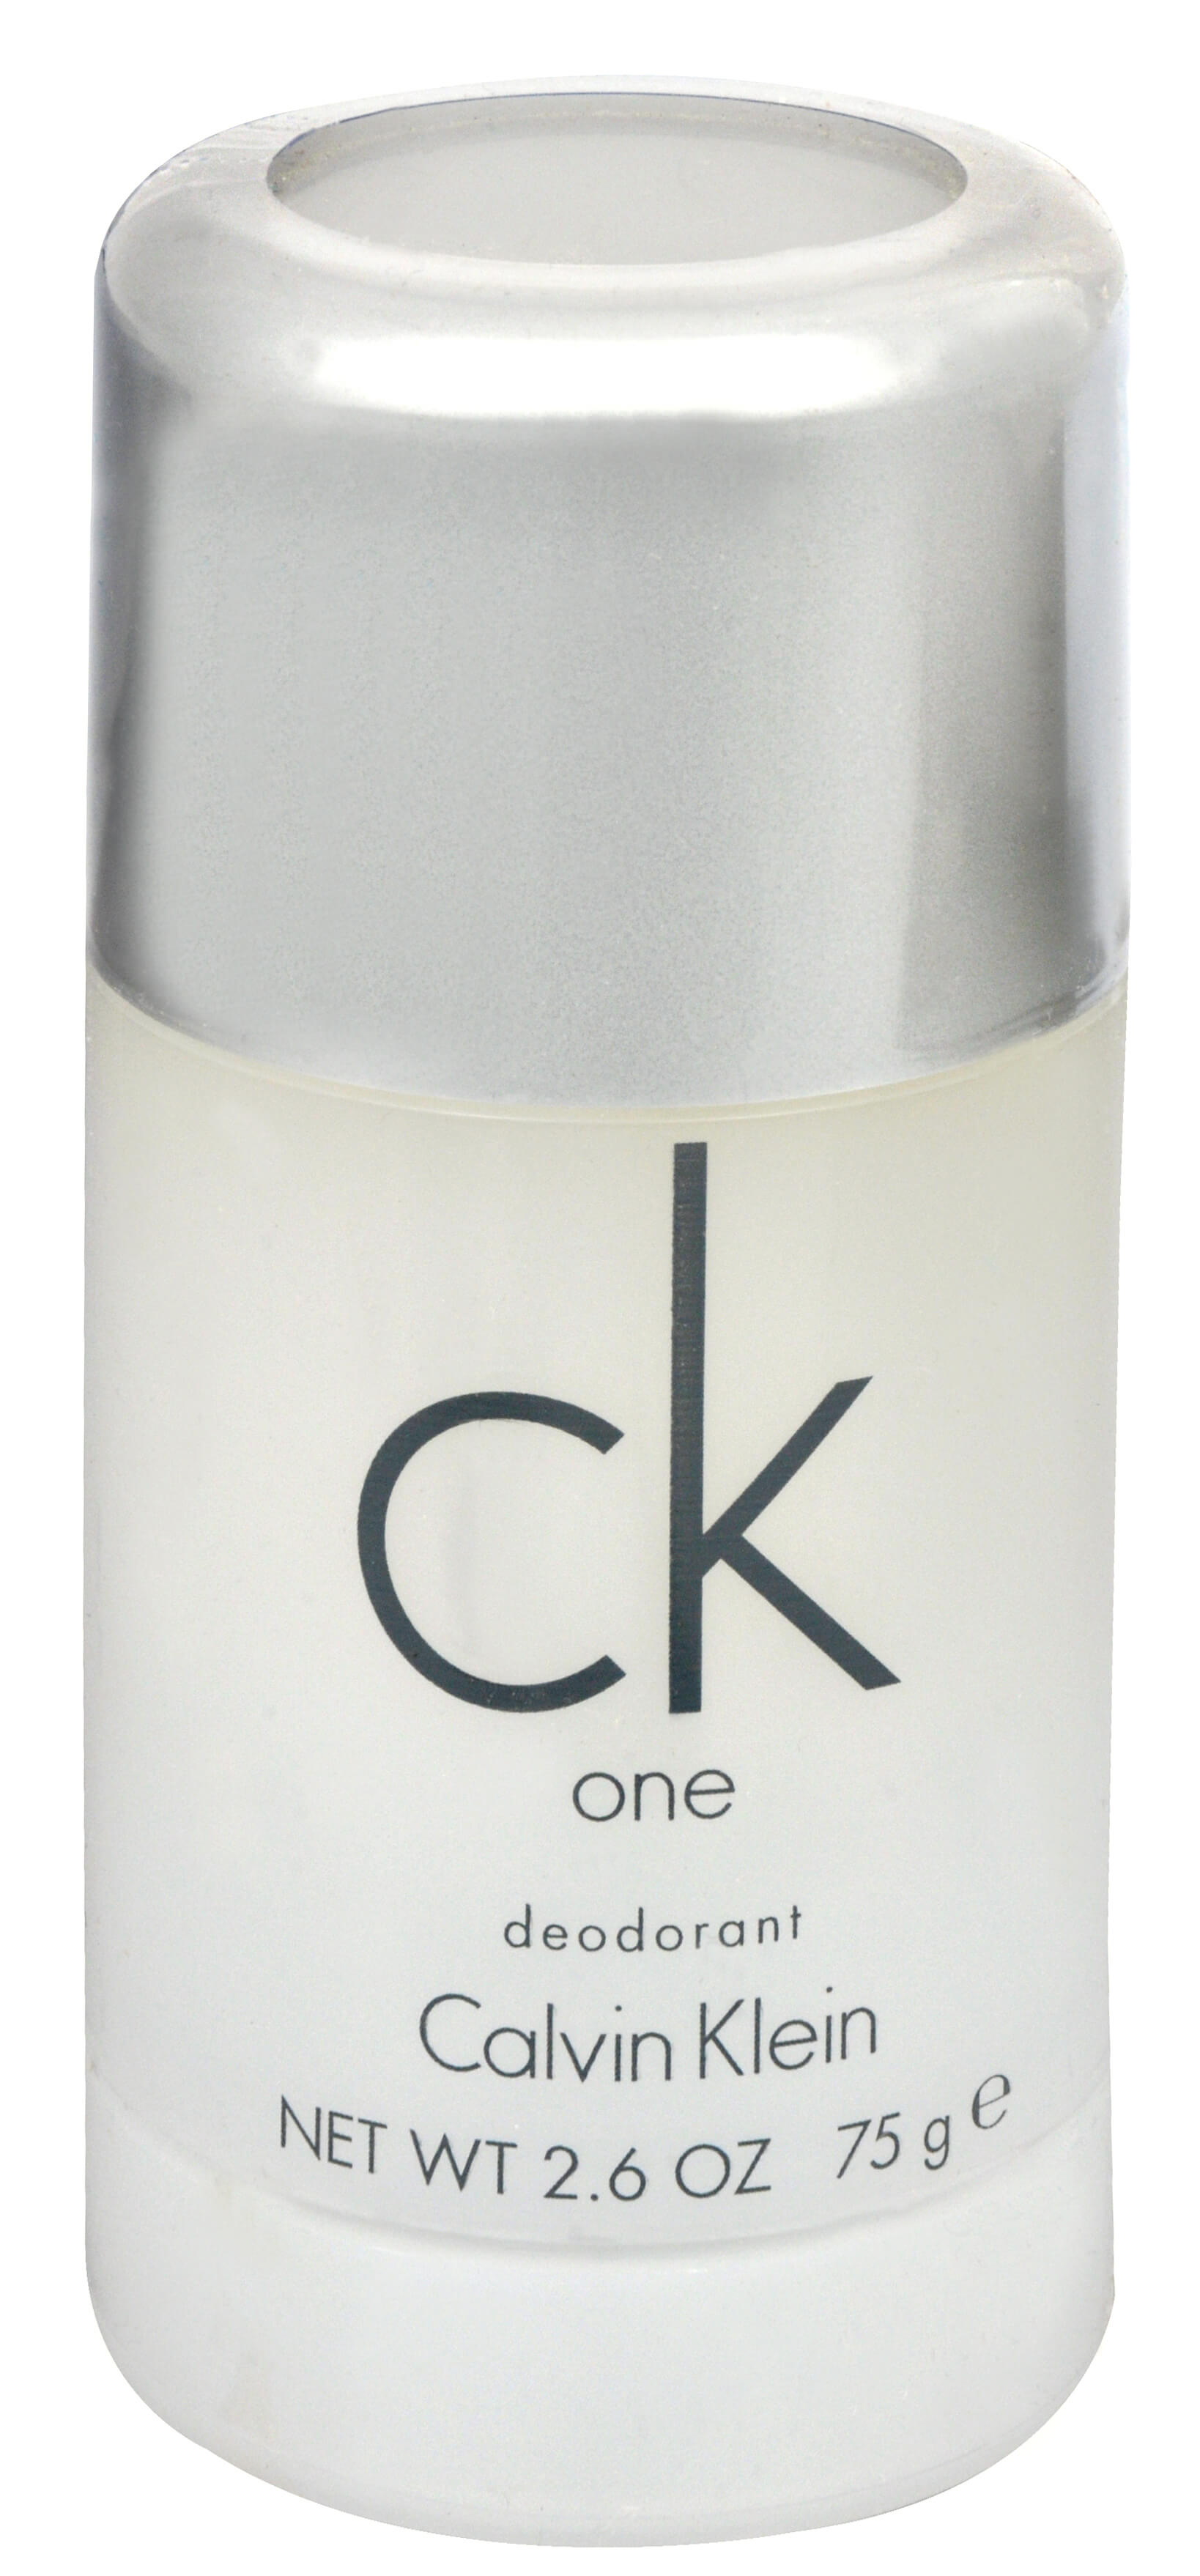 CK One - tuhý deodorant